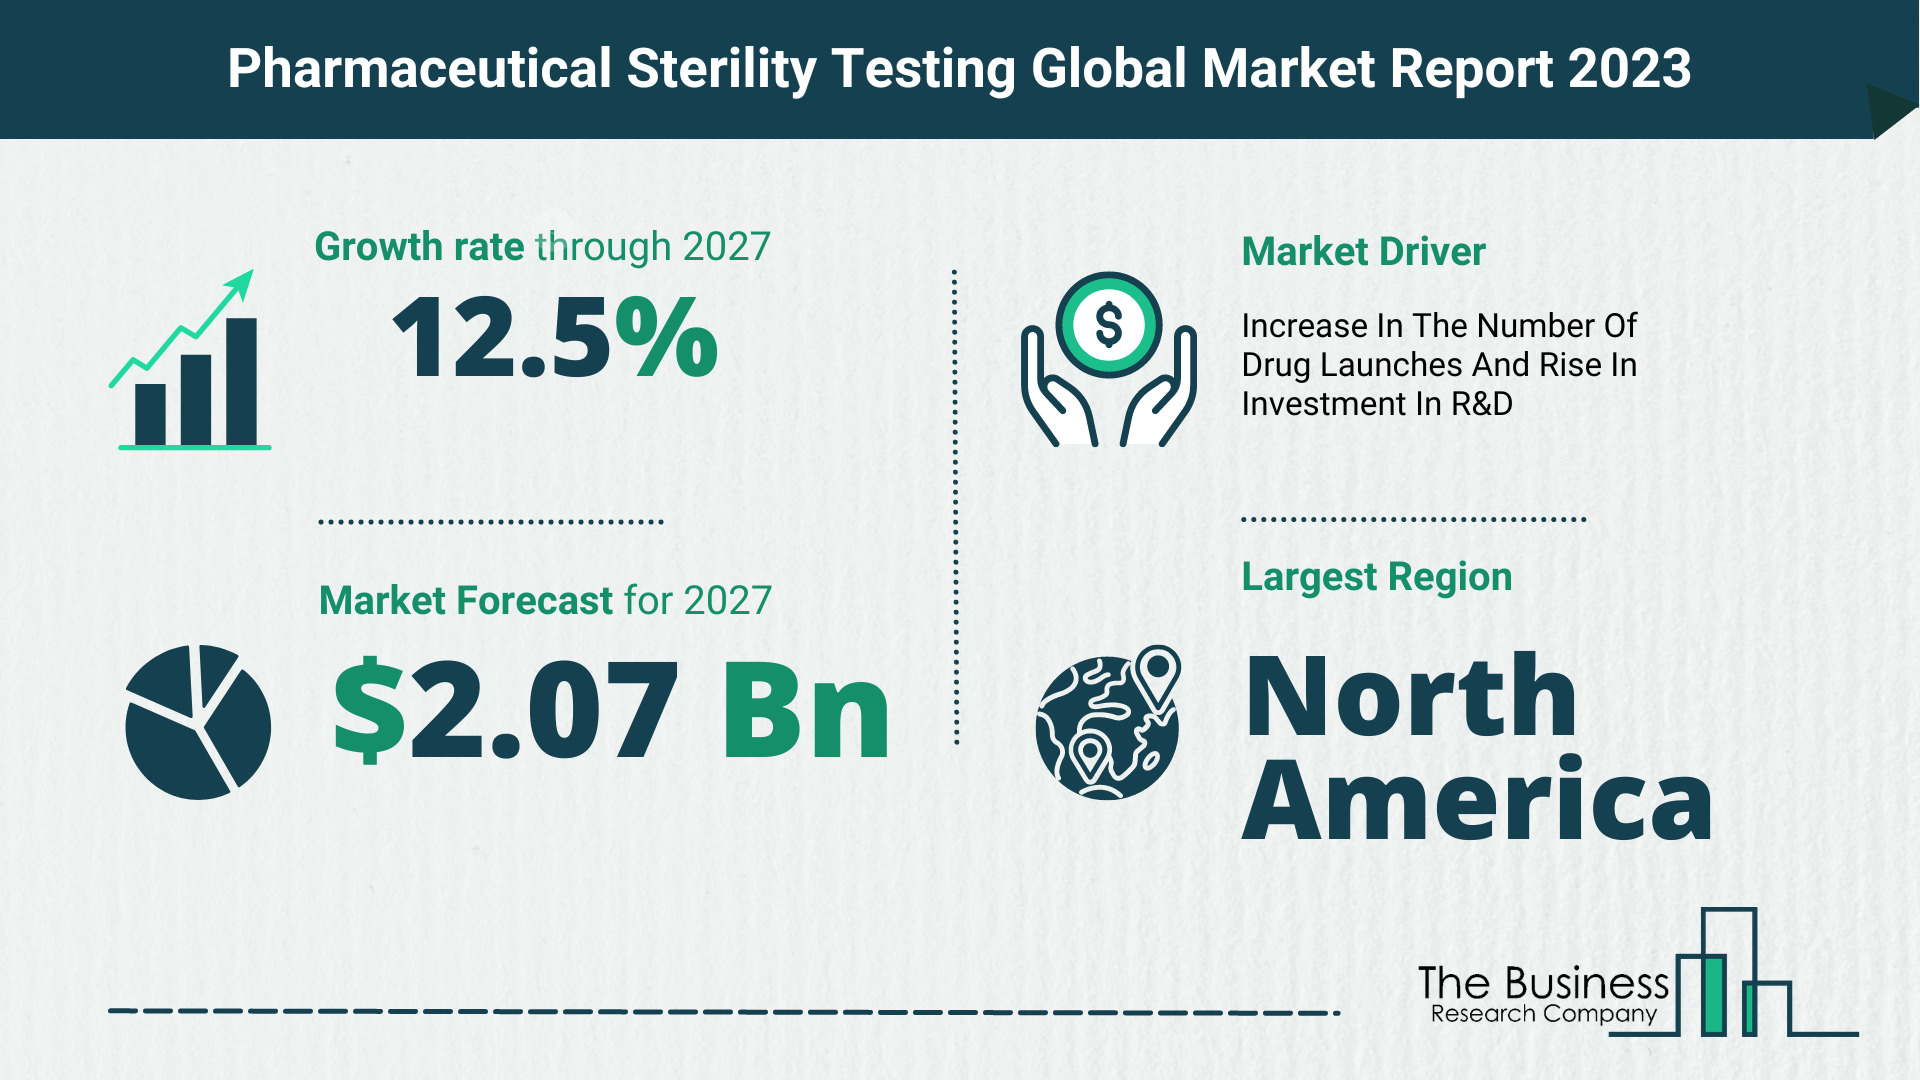 Global Pharmaceutical Sterility Testing Market Size